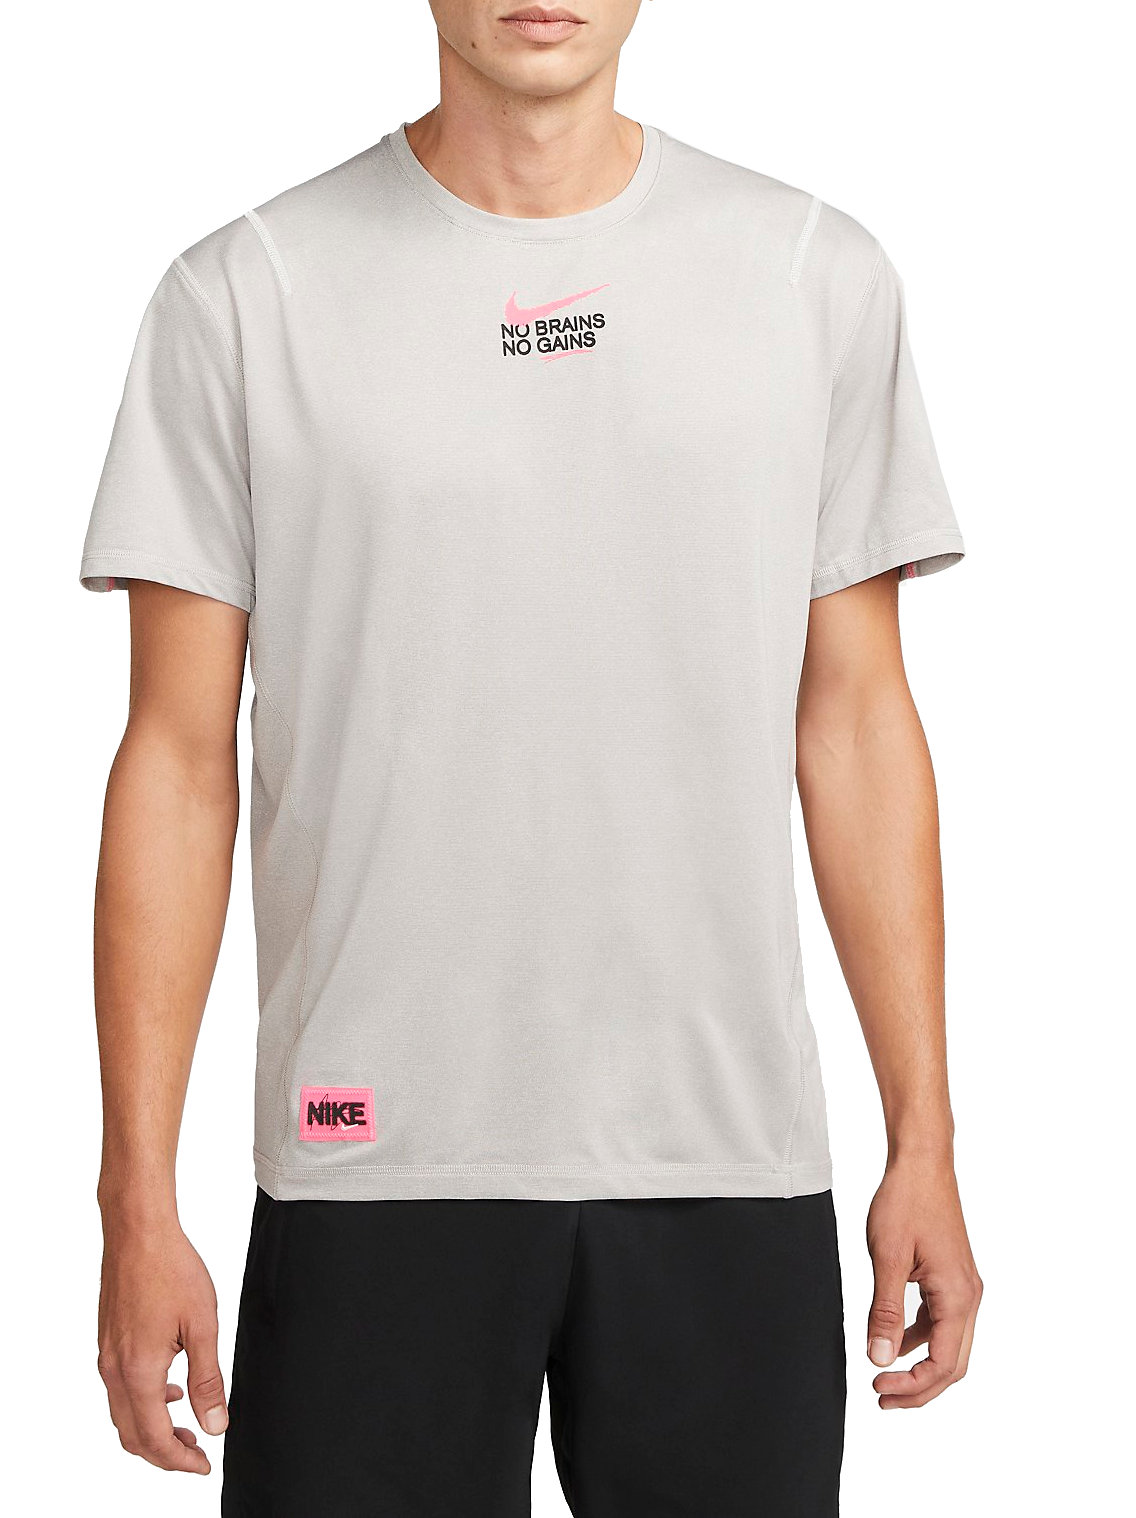 Tee-shirt Nike Dri-FIT D.Y.E. Men s Short-Sleeve Fitness Top